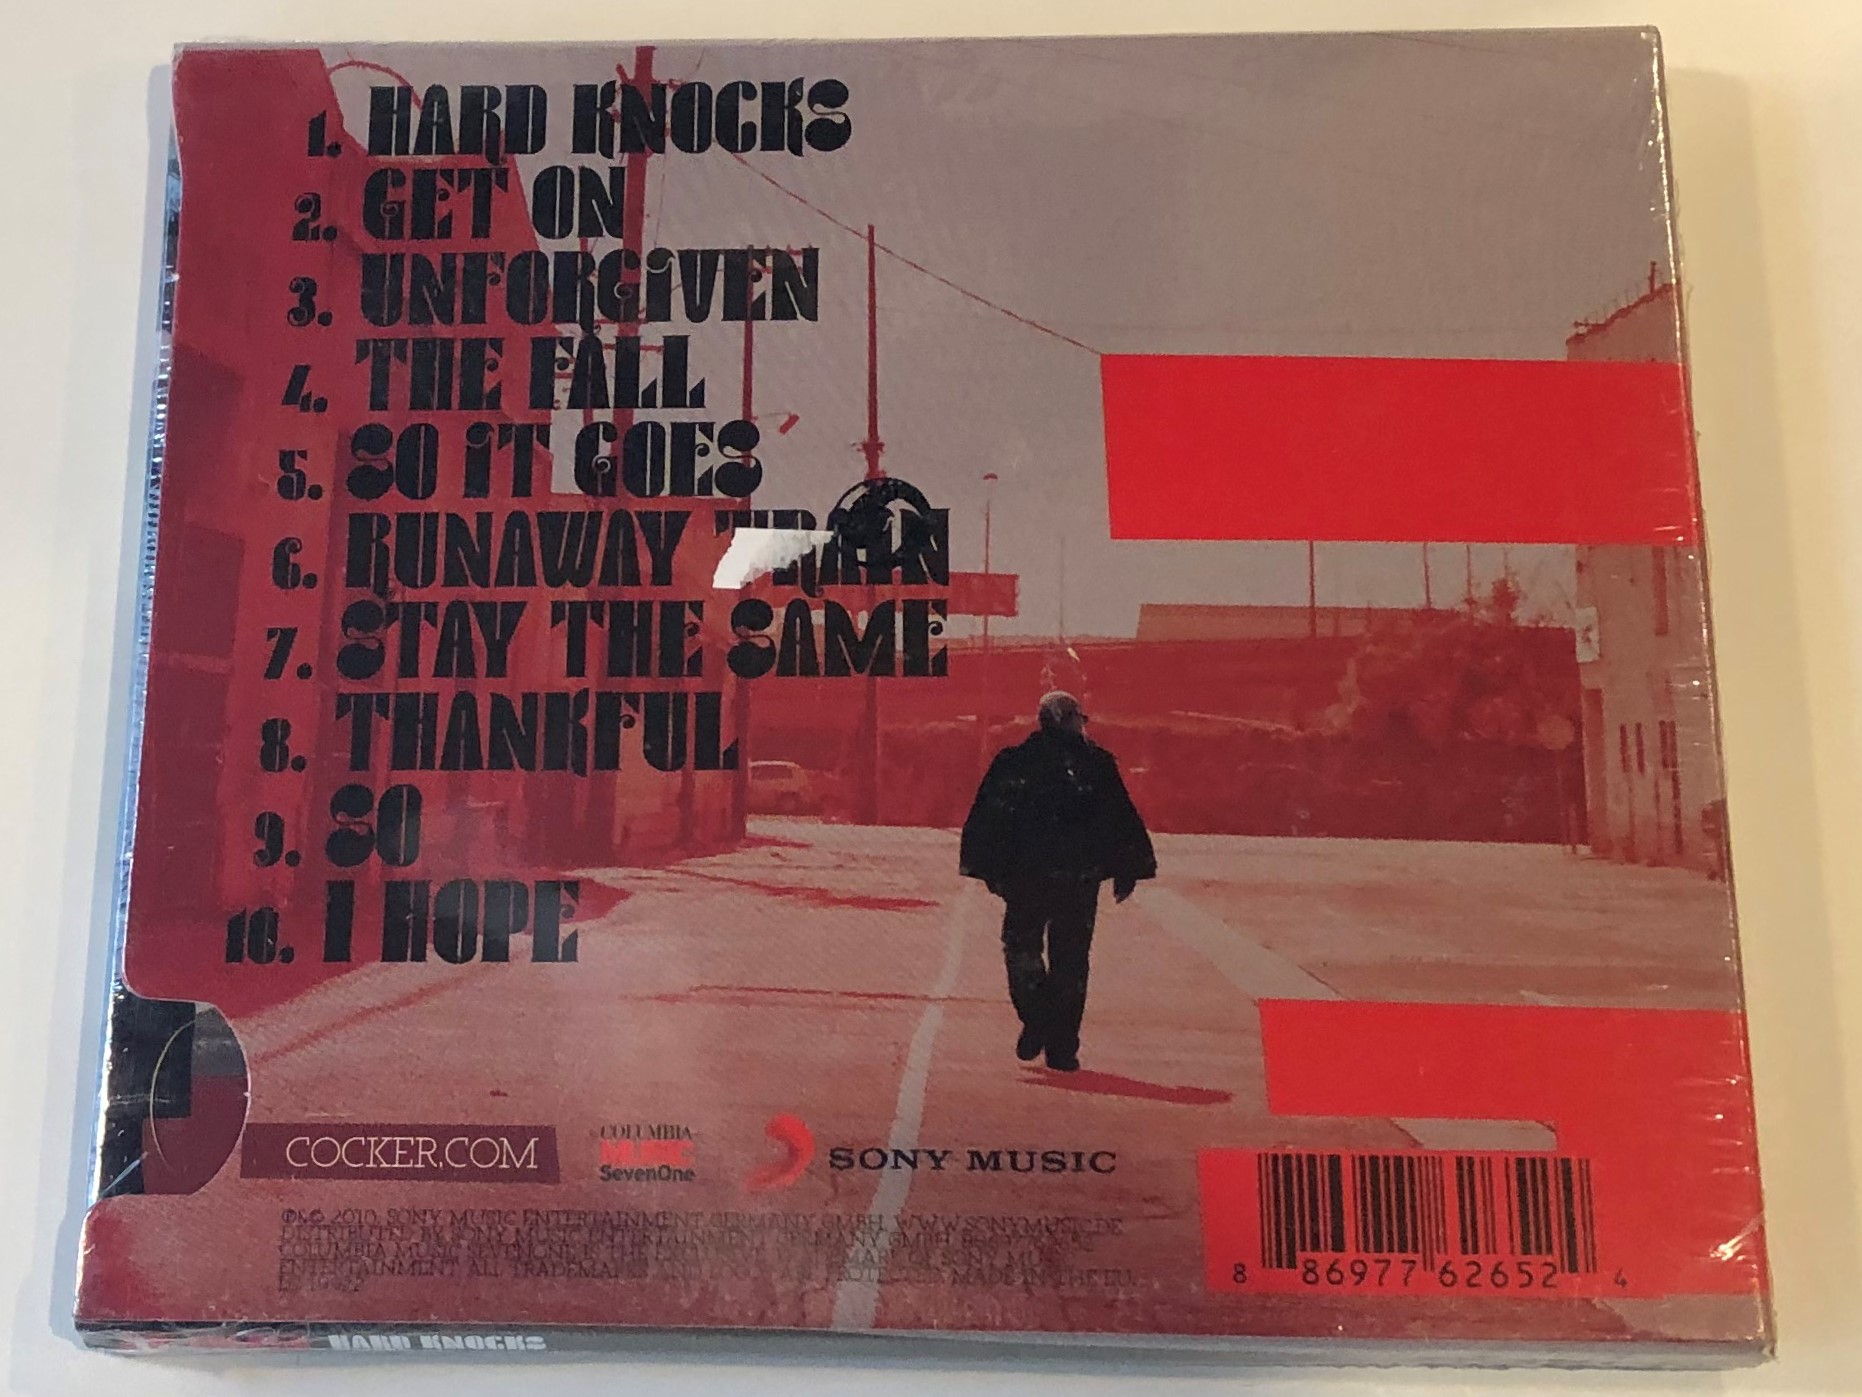 joe-cocker-hard-knocks-sony-music-audio-cd-2010-886977626524-2-.jpg